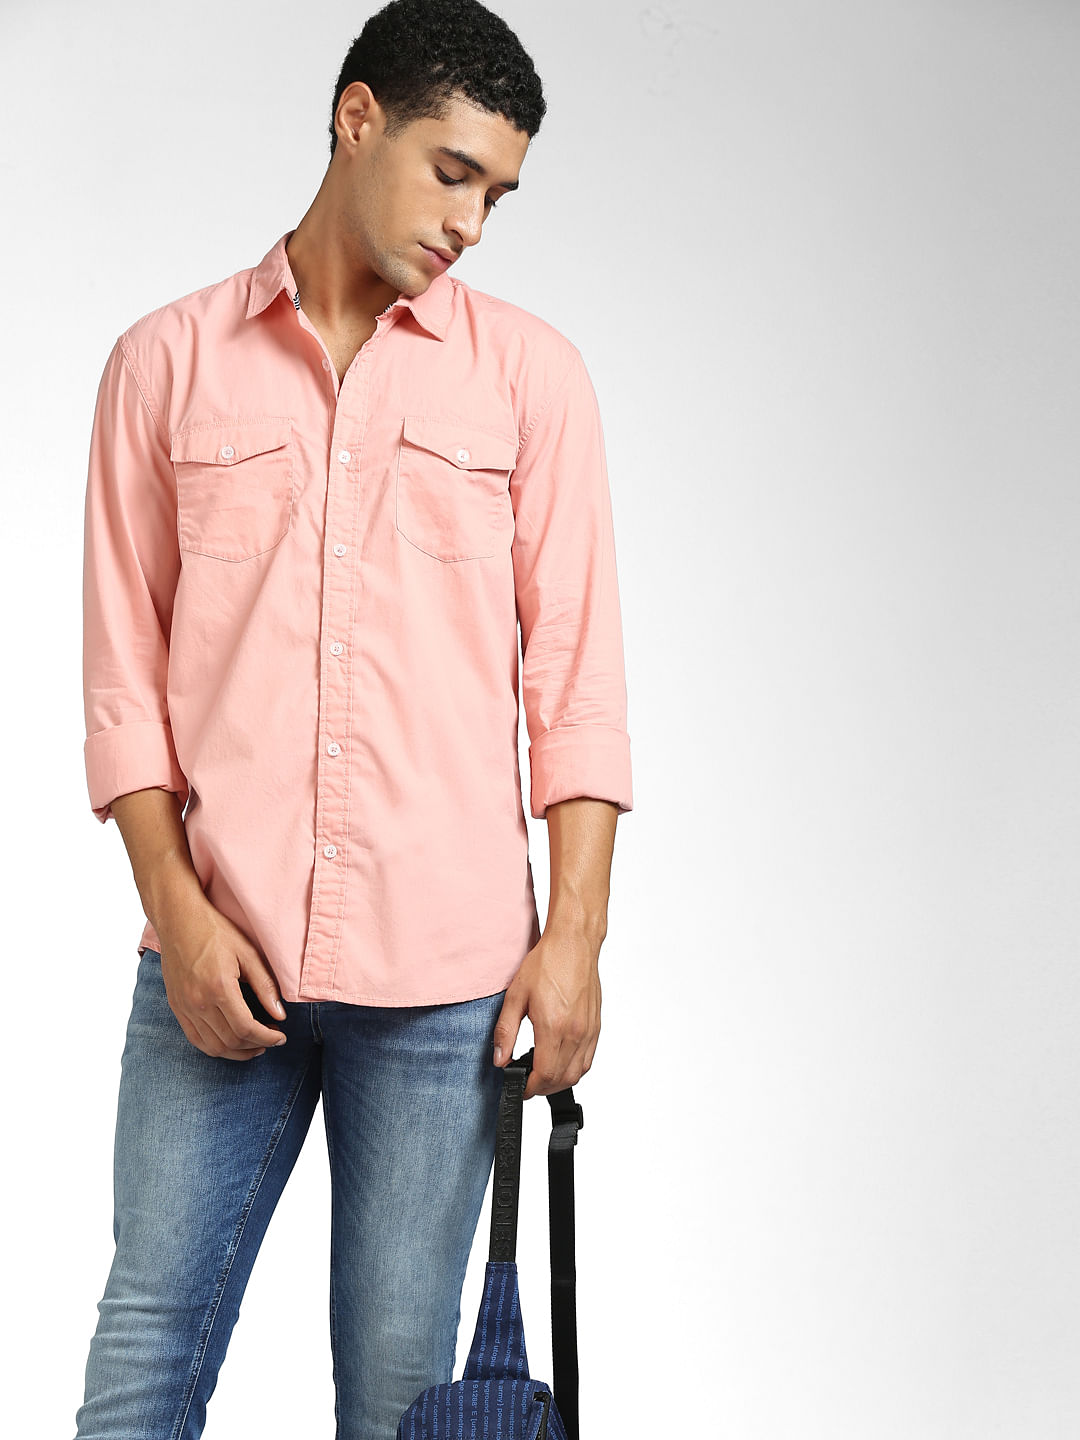 Red M Trussardi jeans Shirt discount 50% MEN FASHION Shirts & T-shirts Basic 